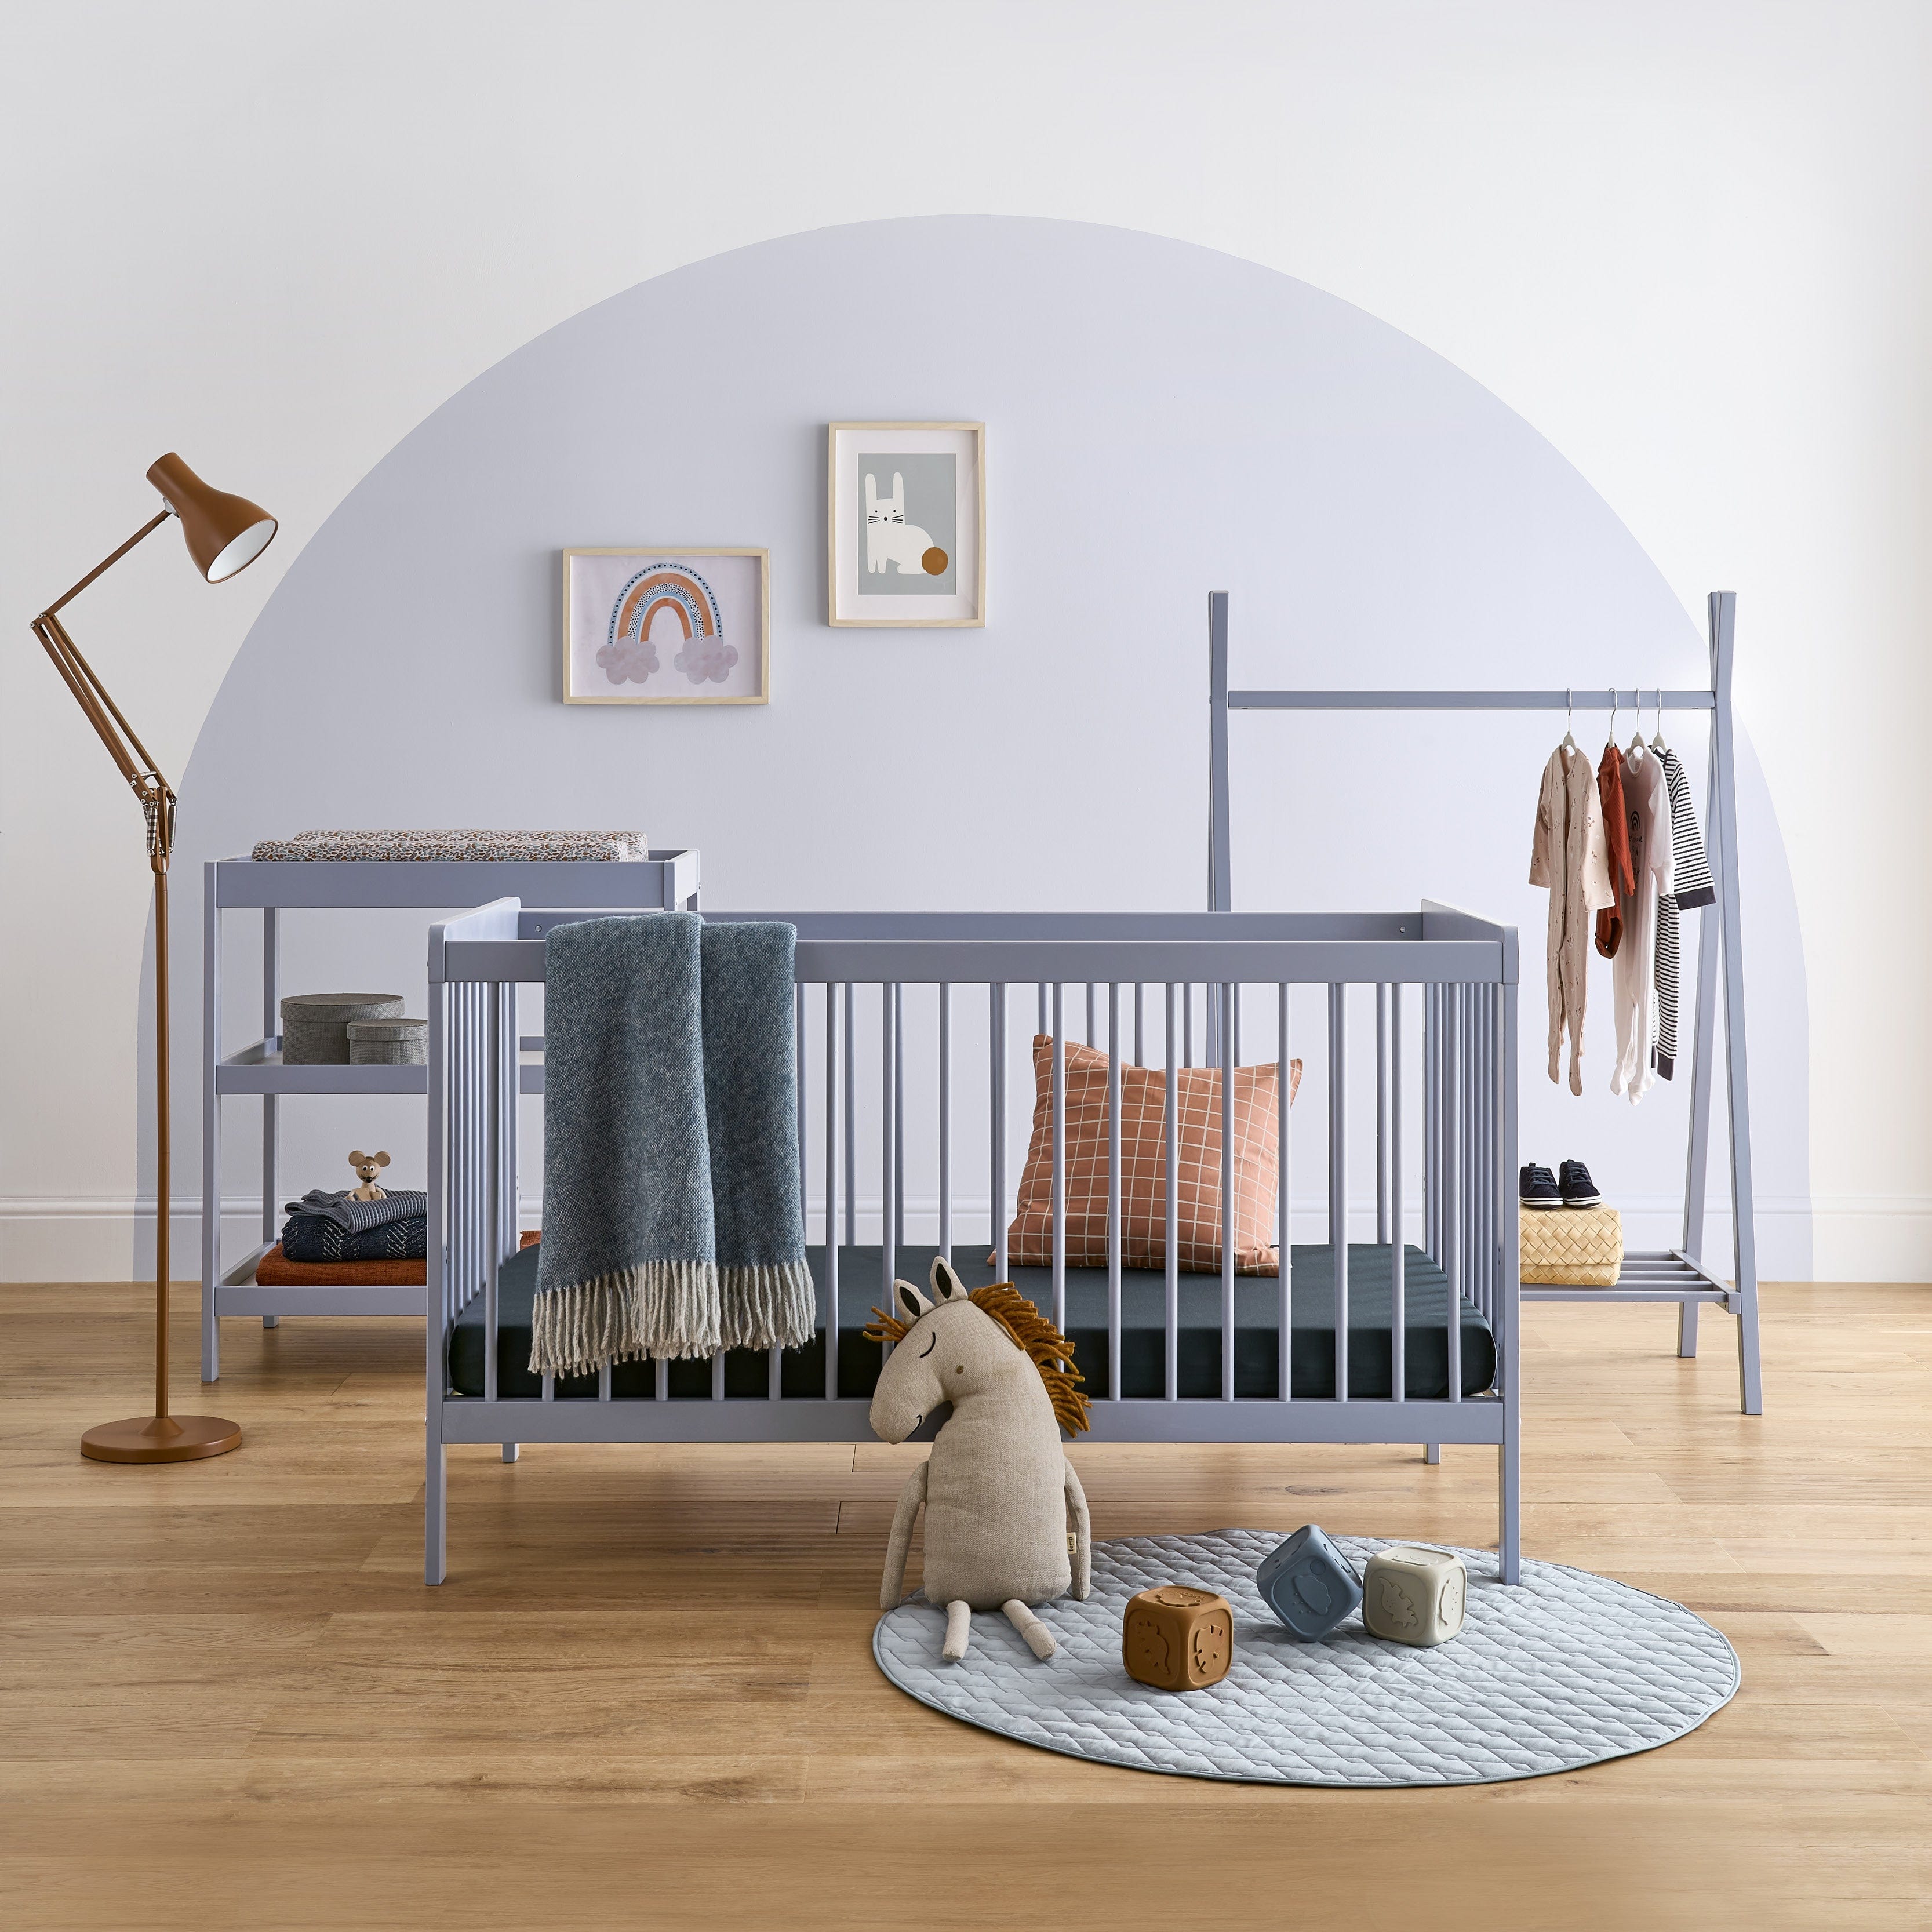 CuddleCo Nursery Room Sets CuddleCo Nola 3 Piece Room Set - Flint Blue